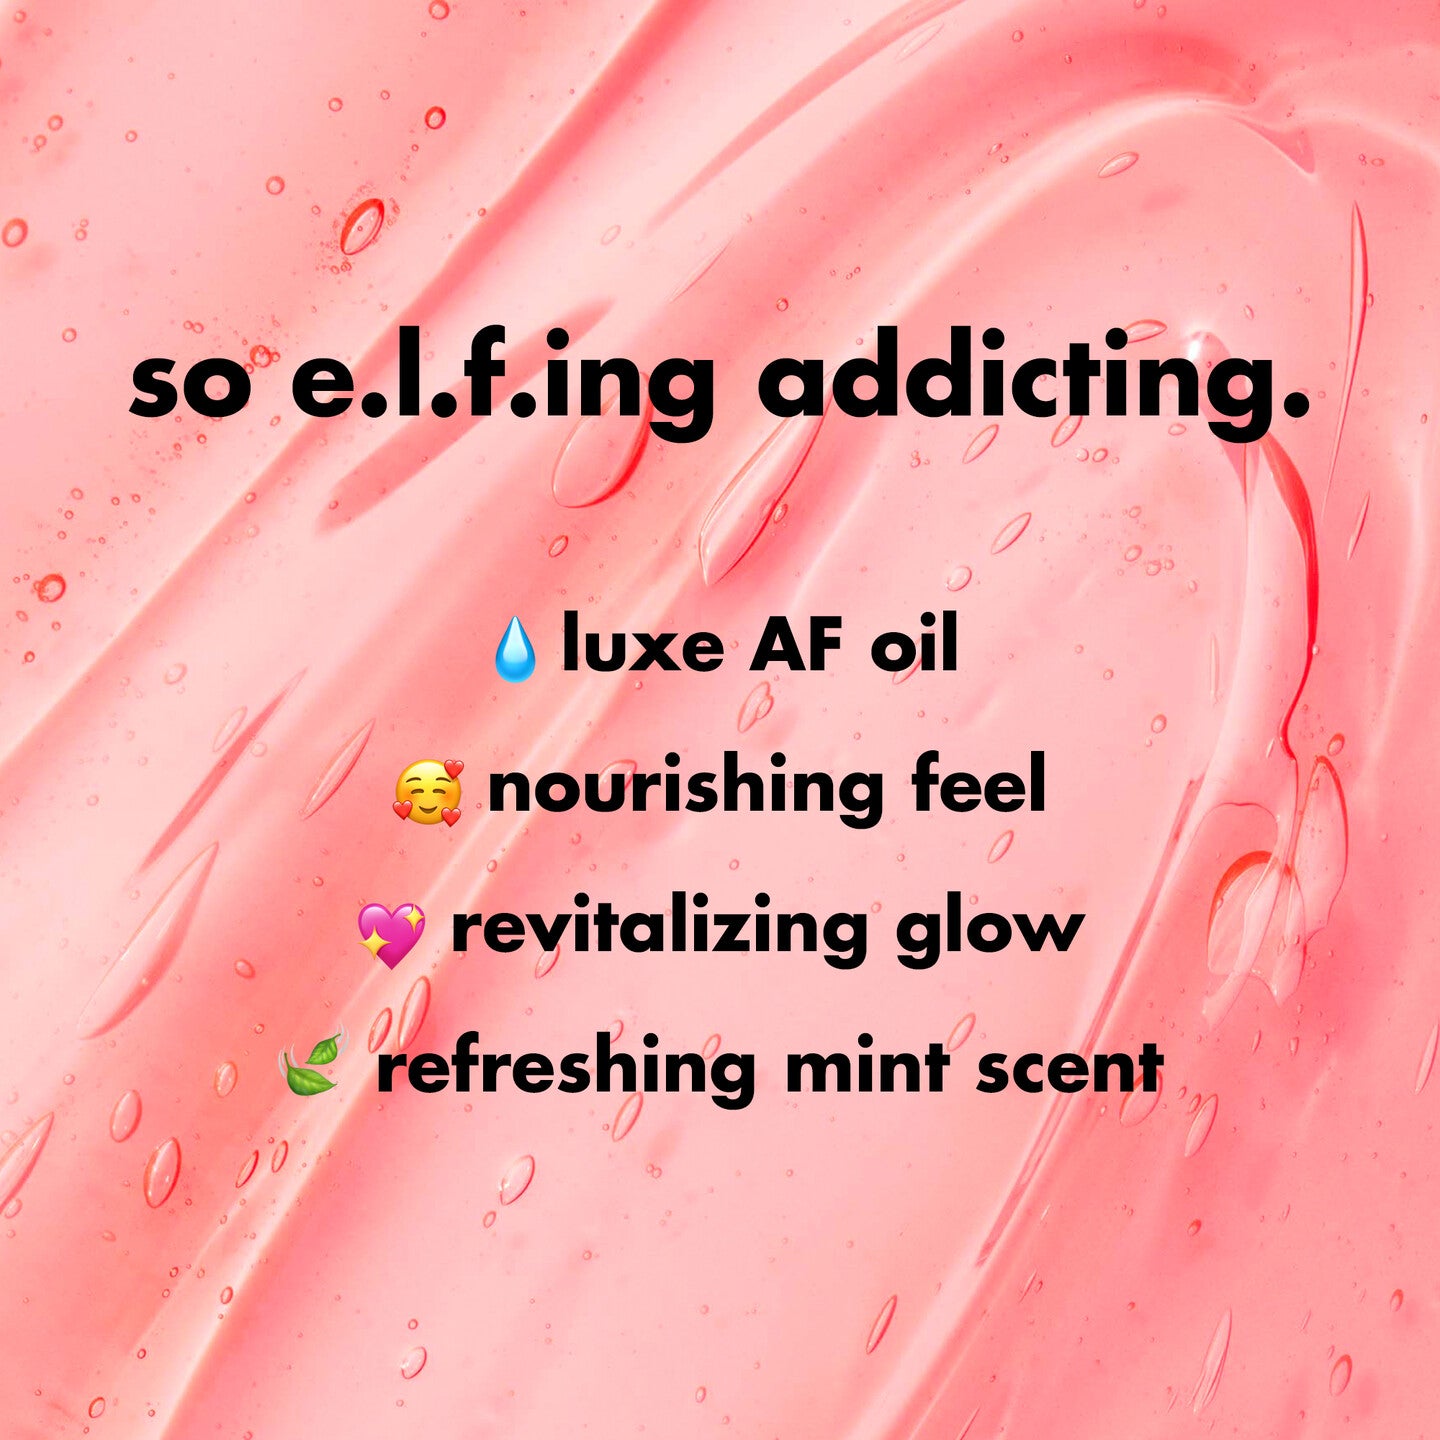 ELF - Glow Reviver Lip Oil